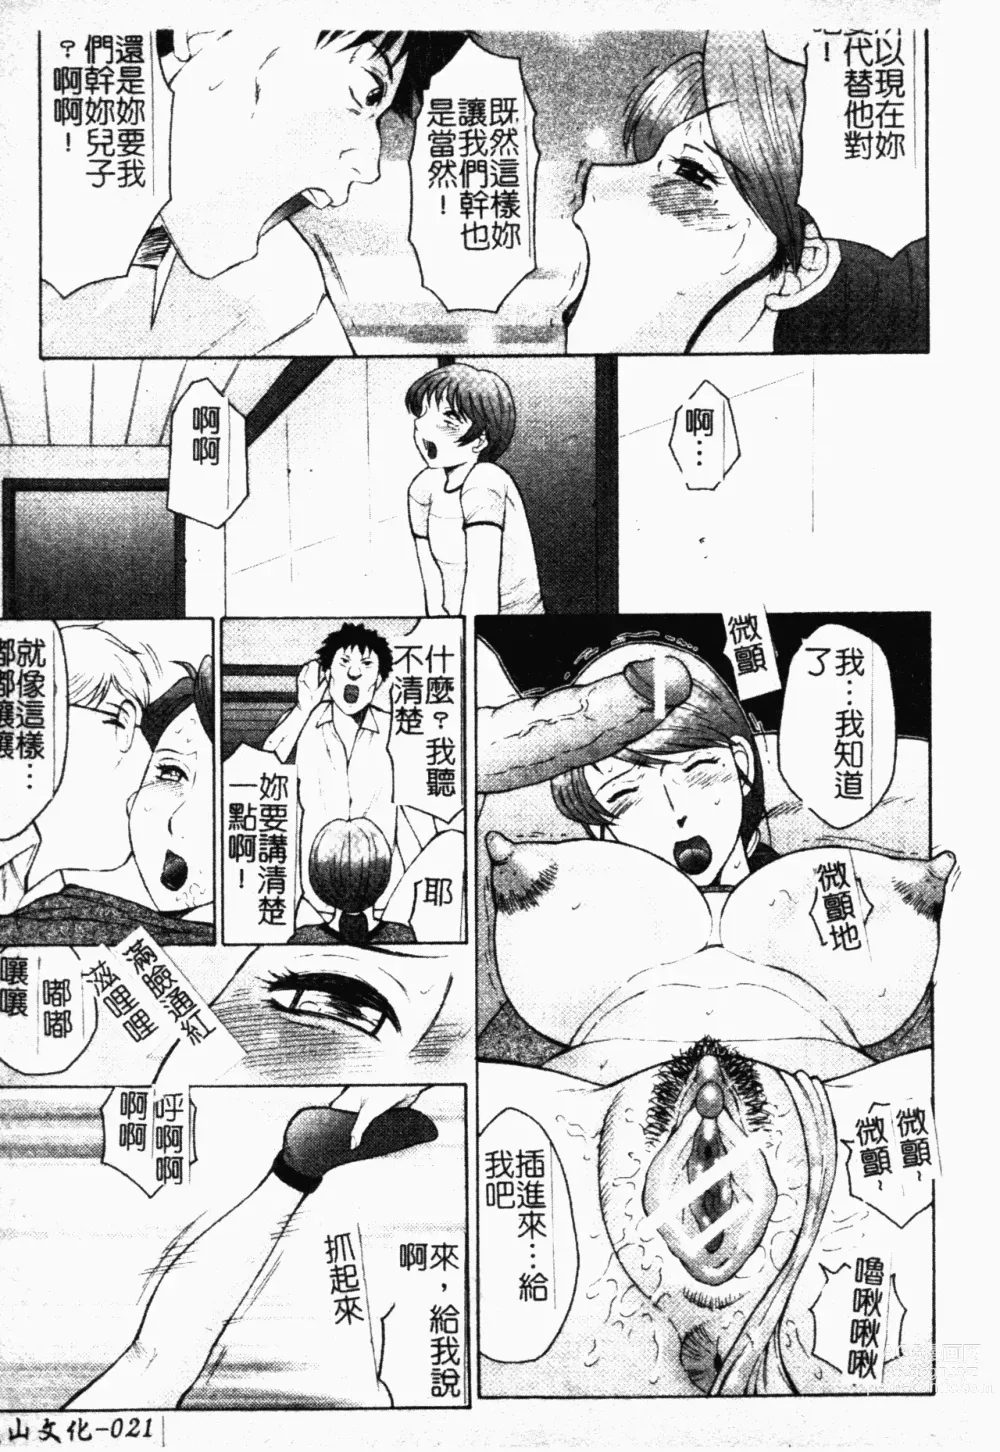 Page 21 of manga Haha Mamire